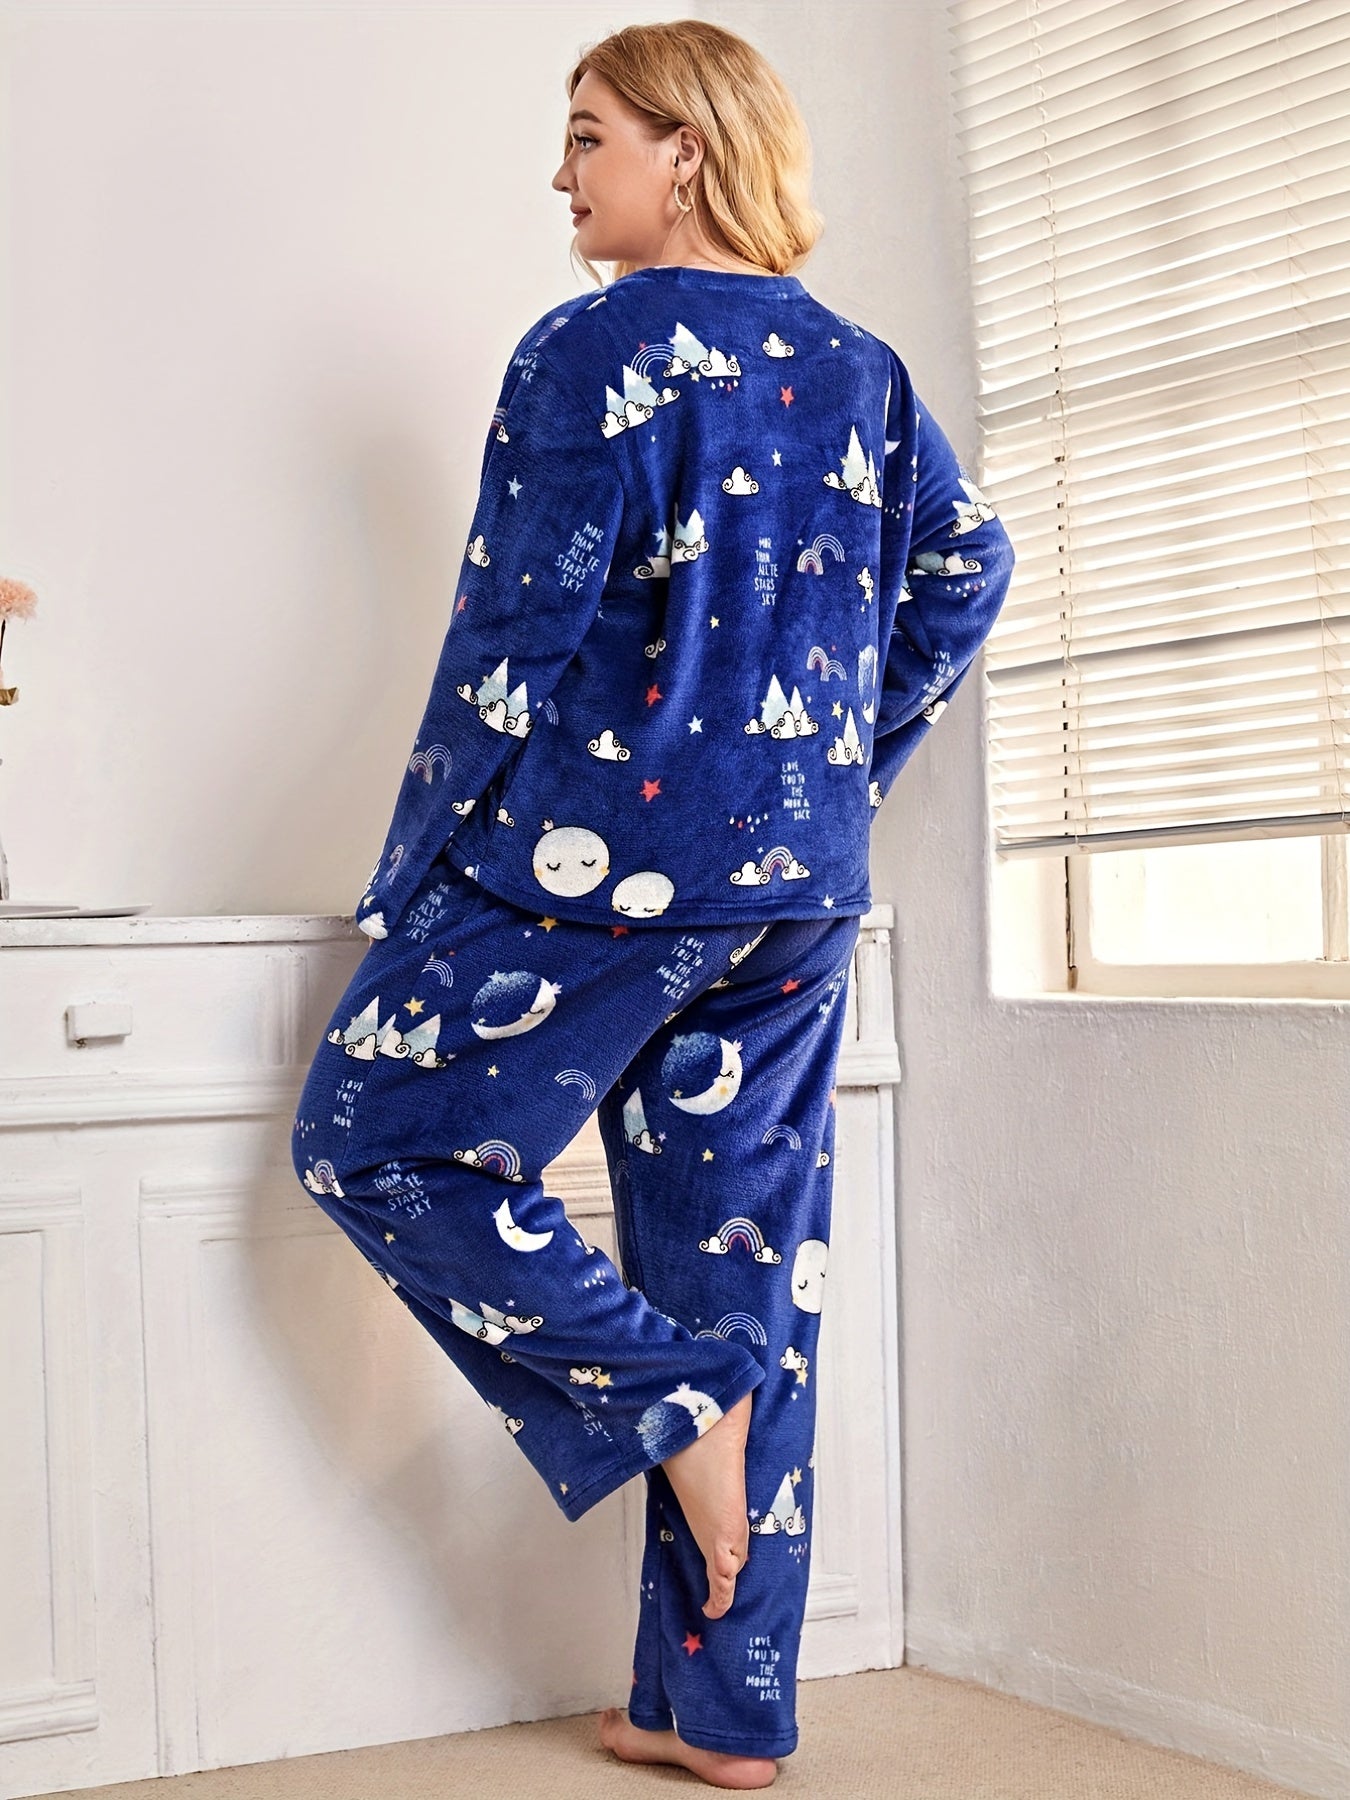 Stylish Plus Size Pajama Set - Women's Star & Cloud Print Long Sleeve Top & Pants - Perfect for Home Wear!